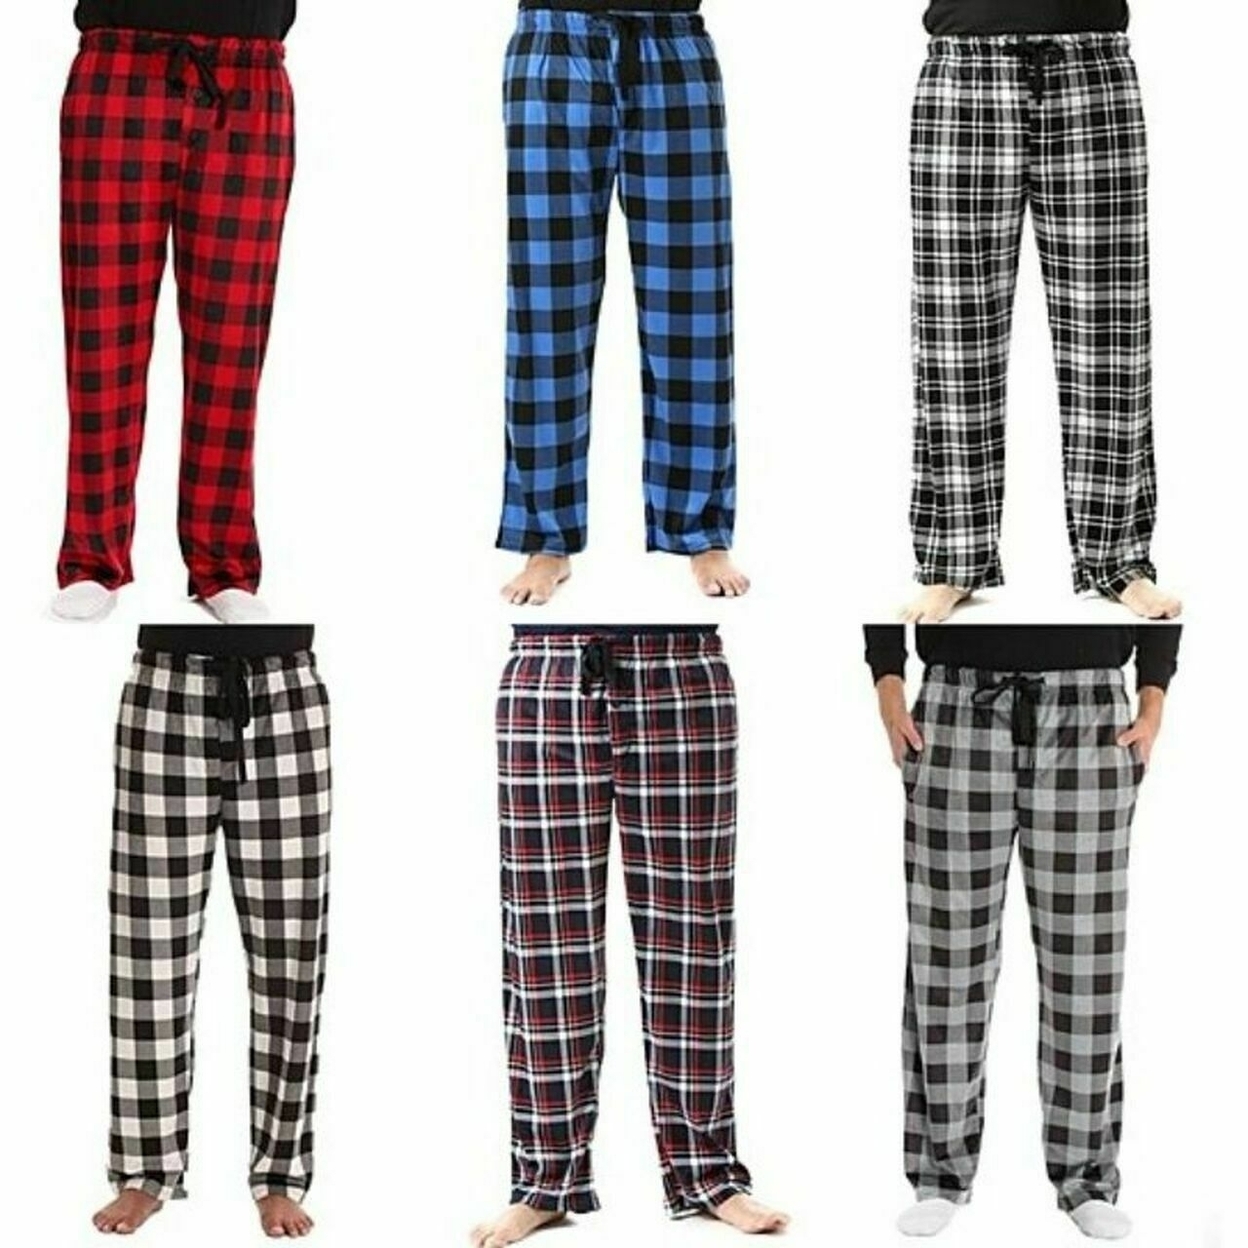 2-Pack: Men's Ultra Soft Cozy Flannel Fleece Plaid Pajama Sleep Bottom Lounge Pants - Black & Grey, Large